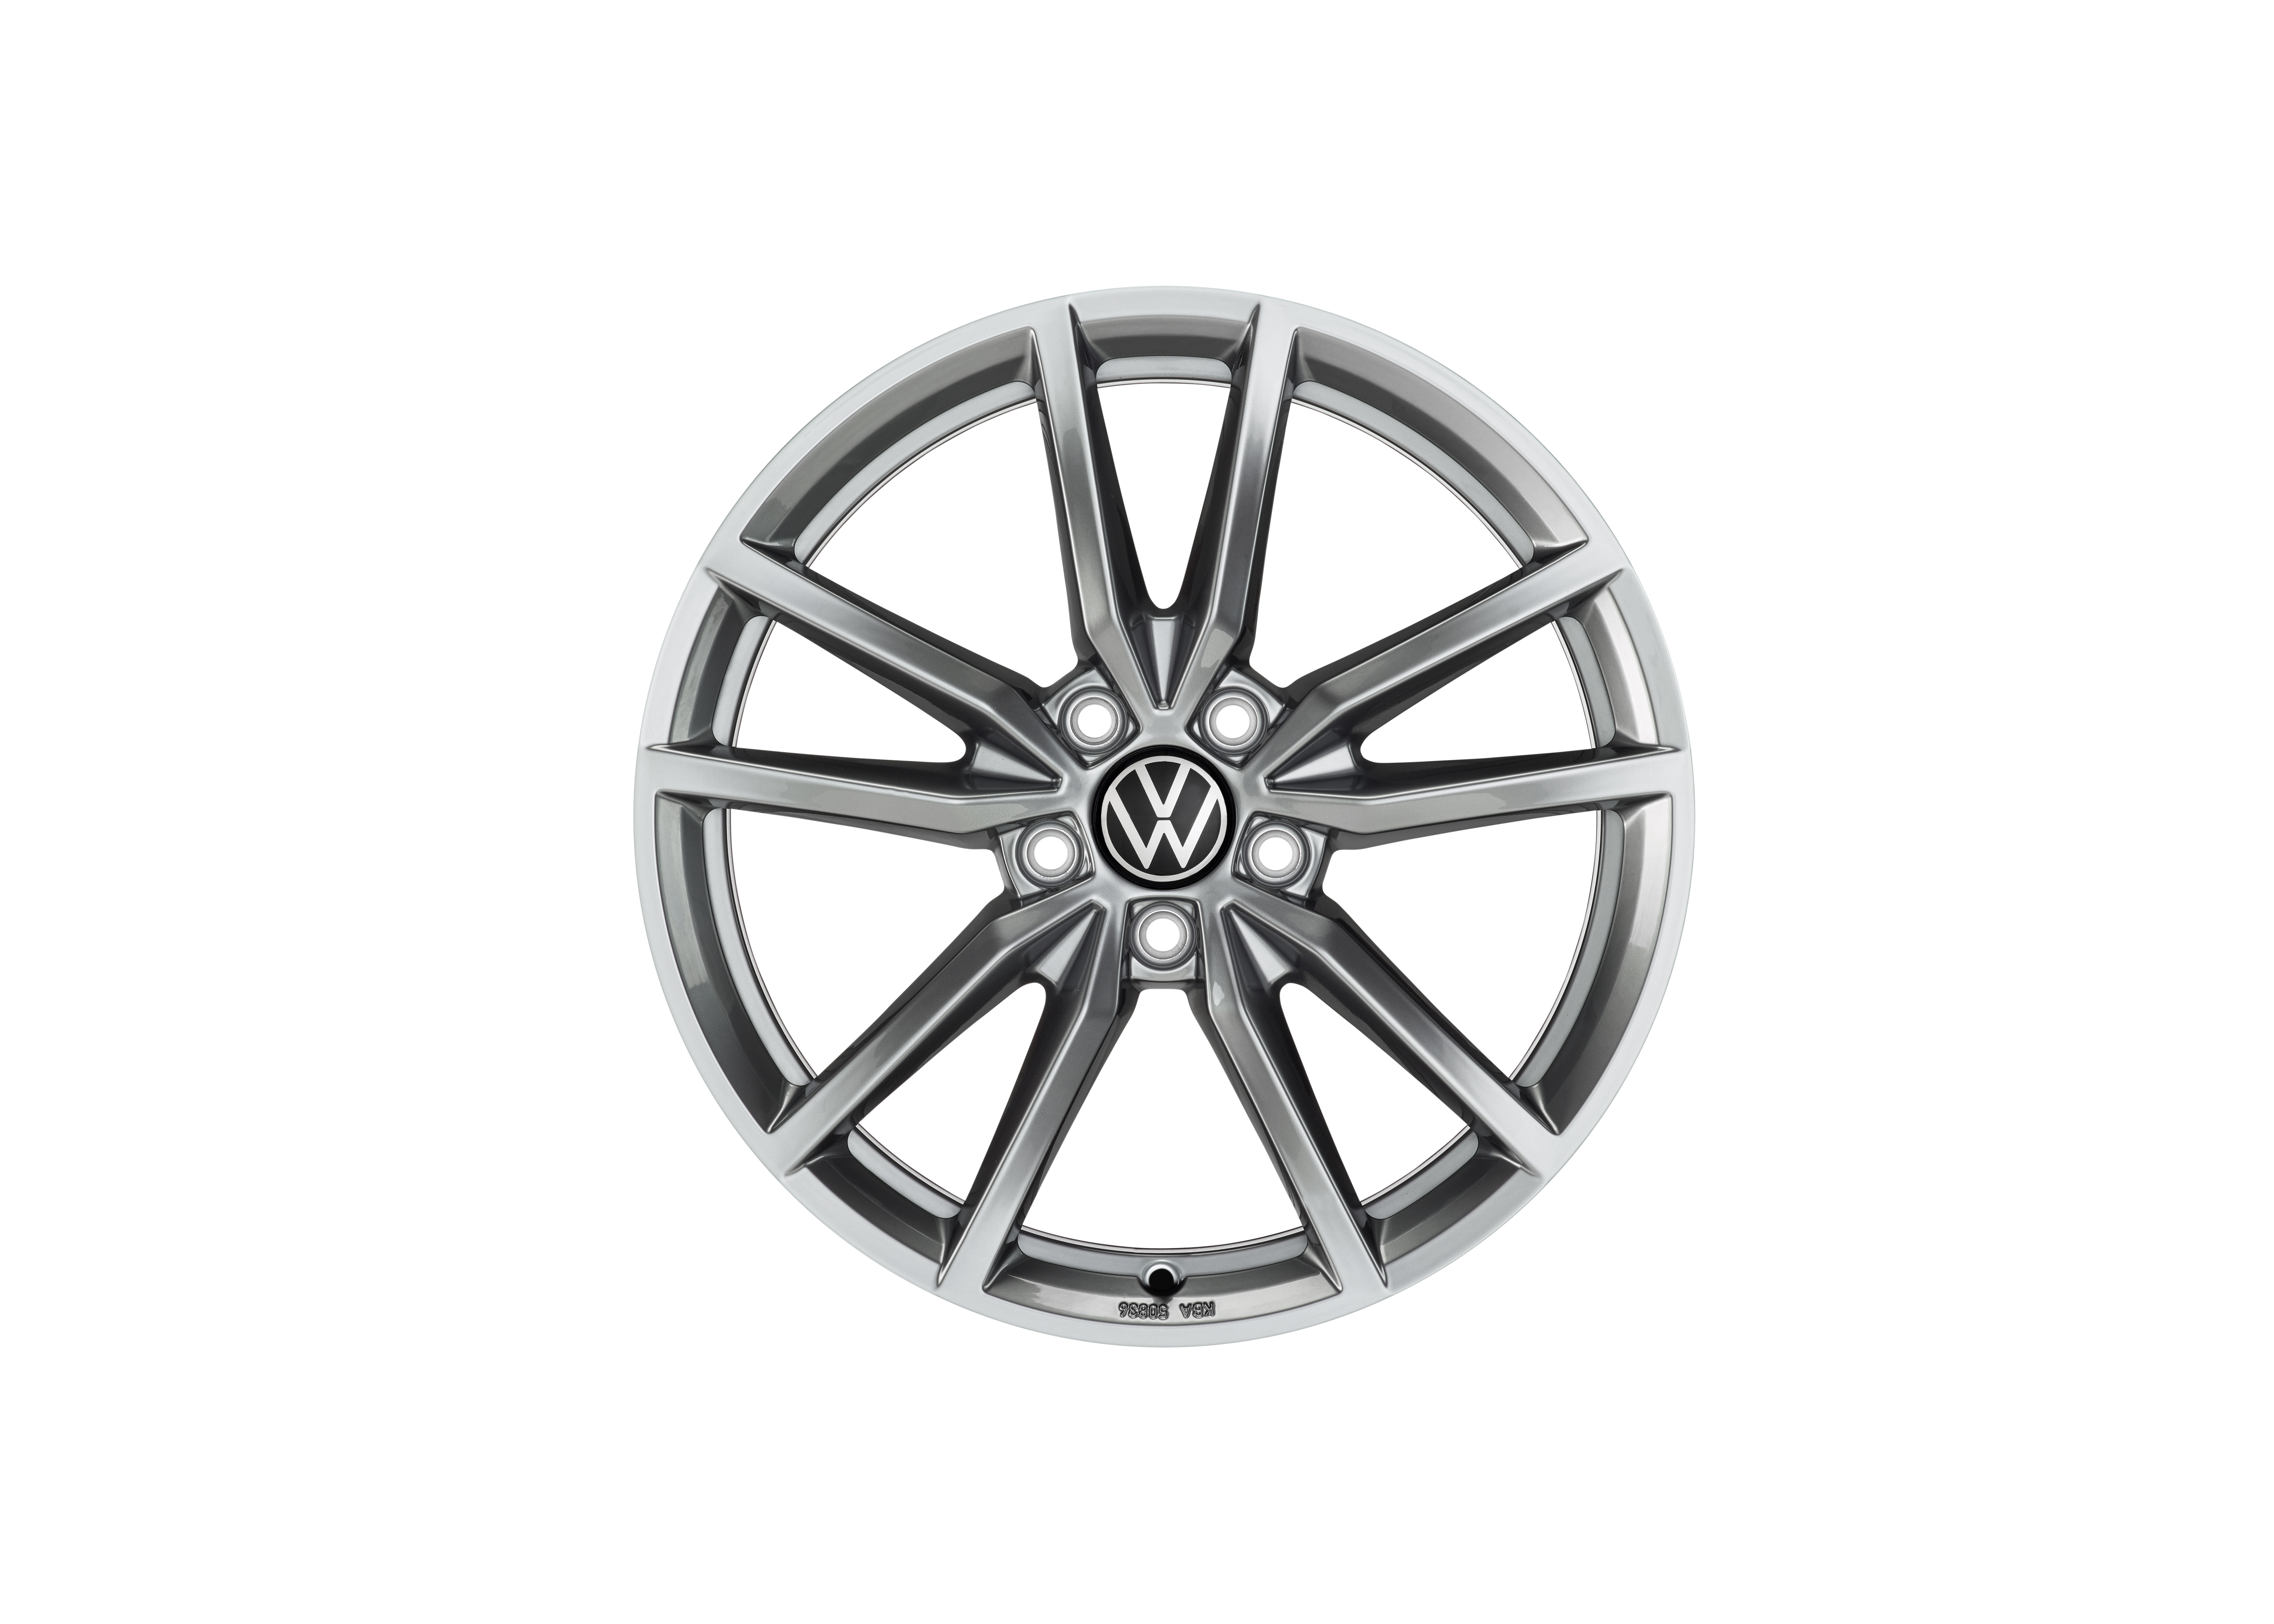 VW Alufelge Pretoria 18 Zoll Galvanograu metallic - 5G0071498A Z49